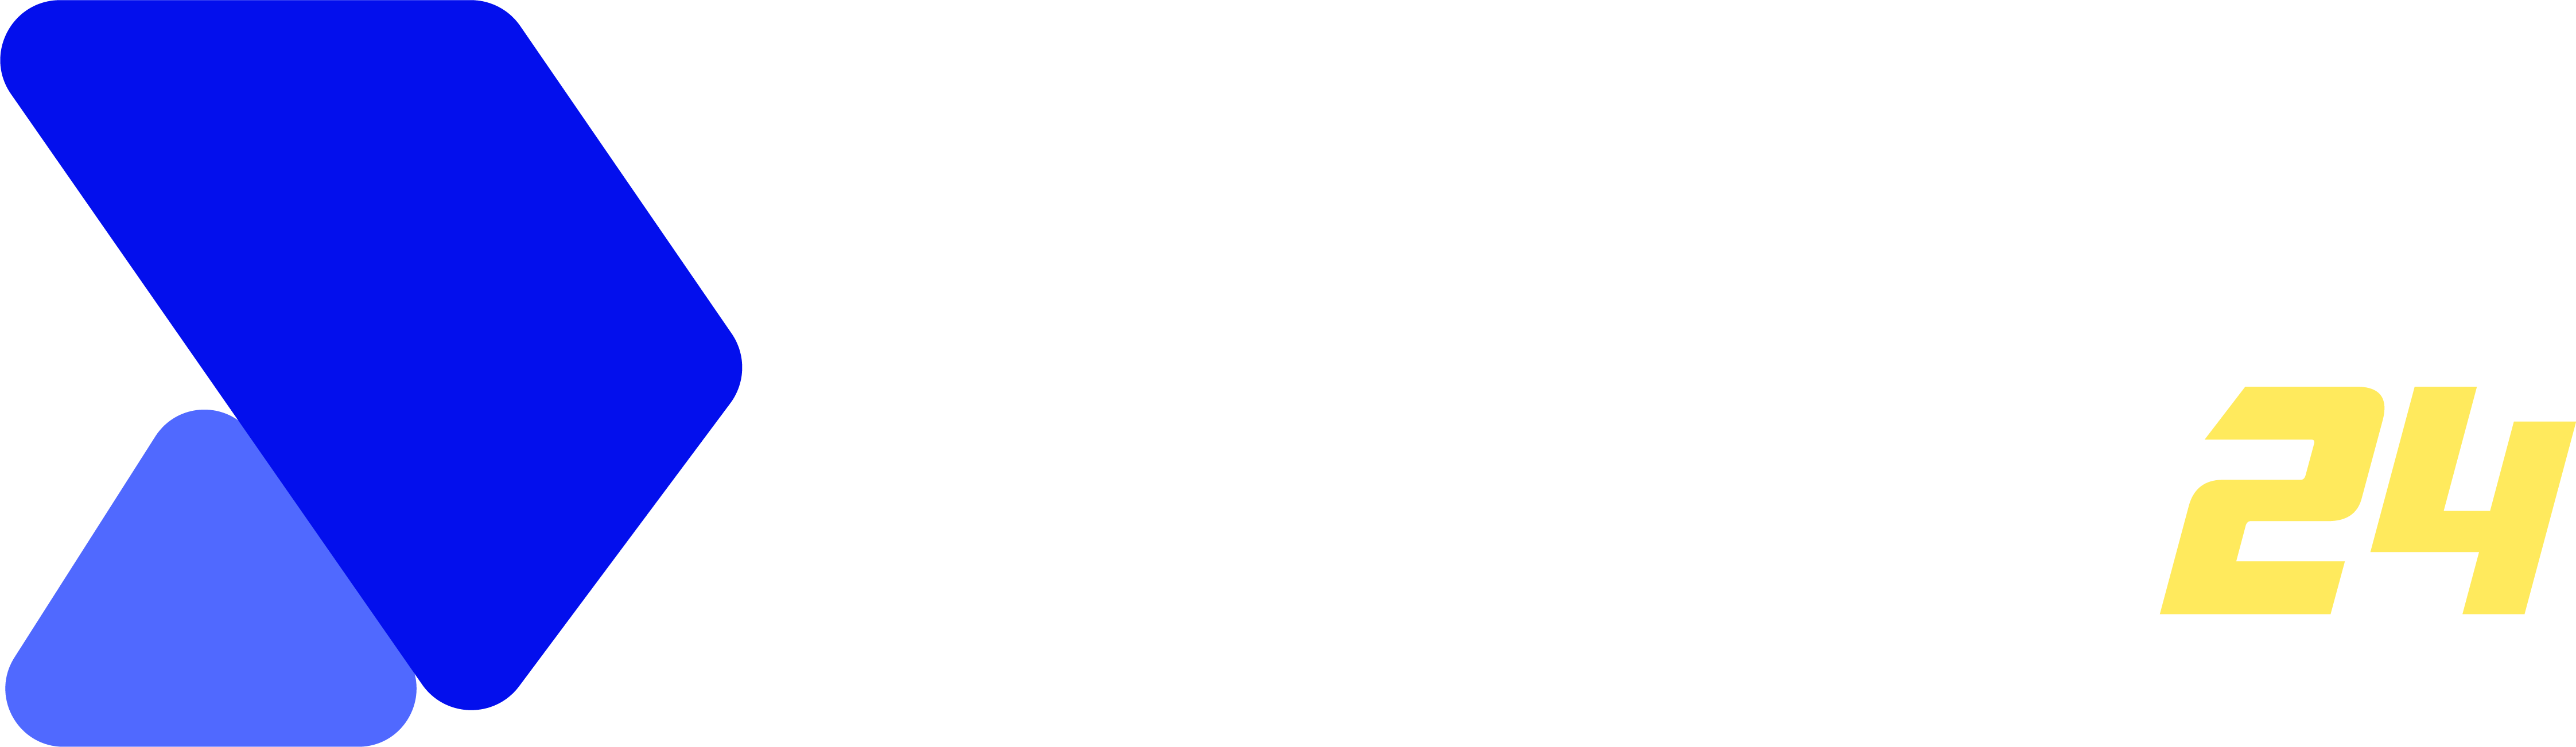 Business Drive Service 24/7